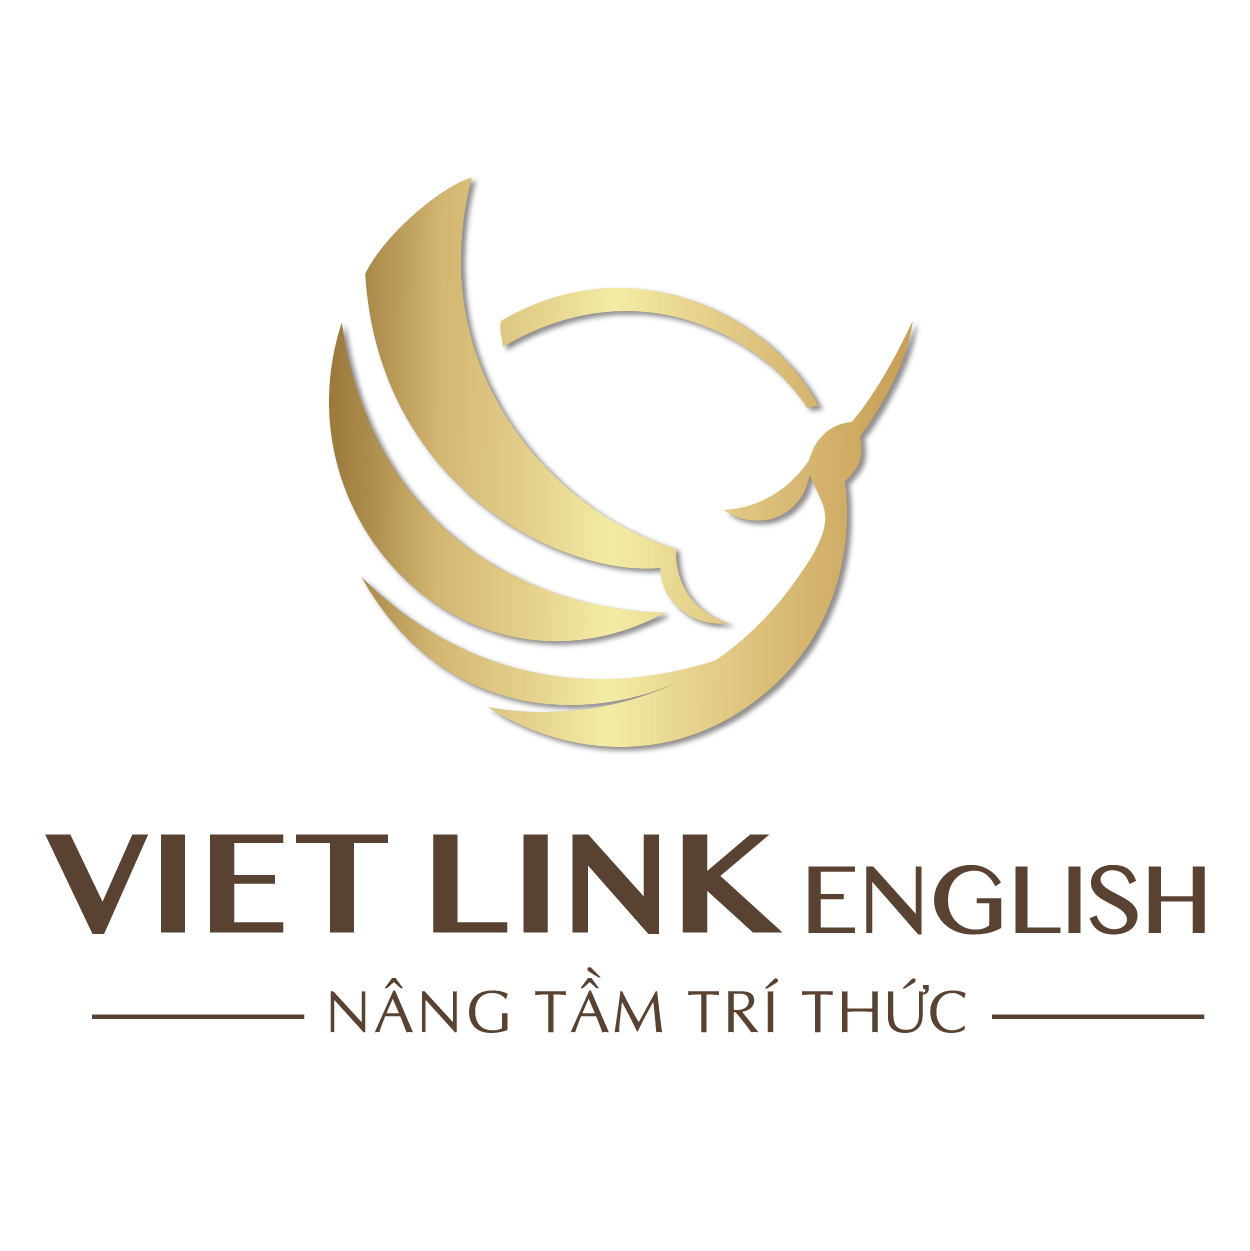 VietLink English